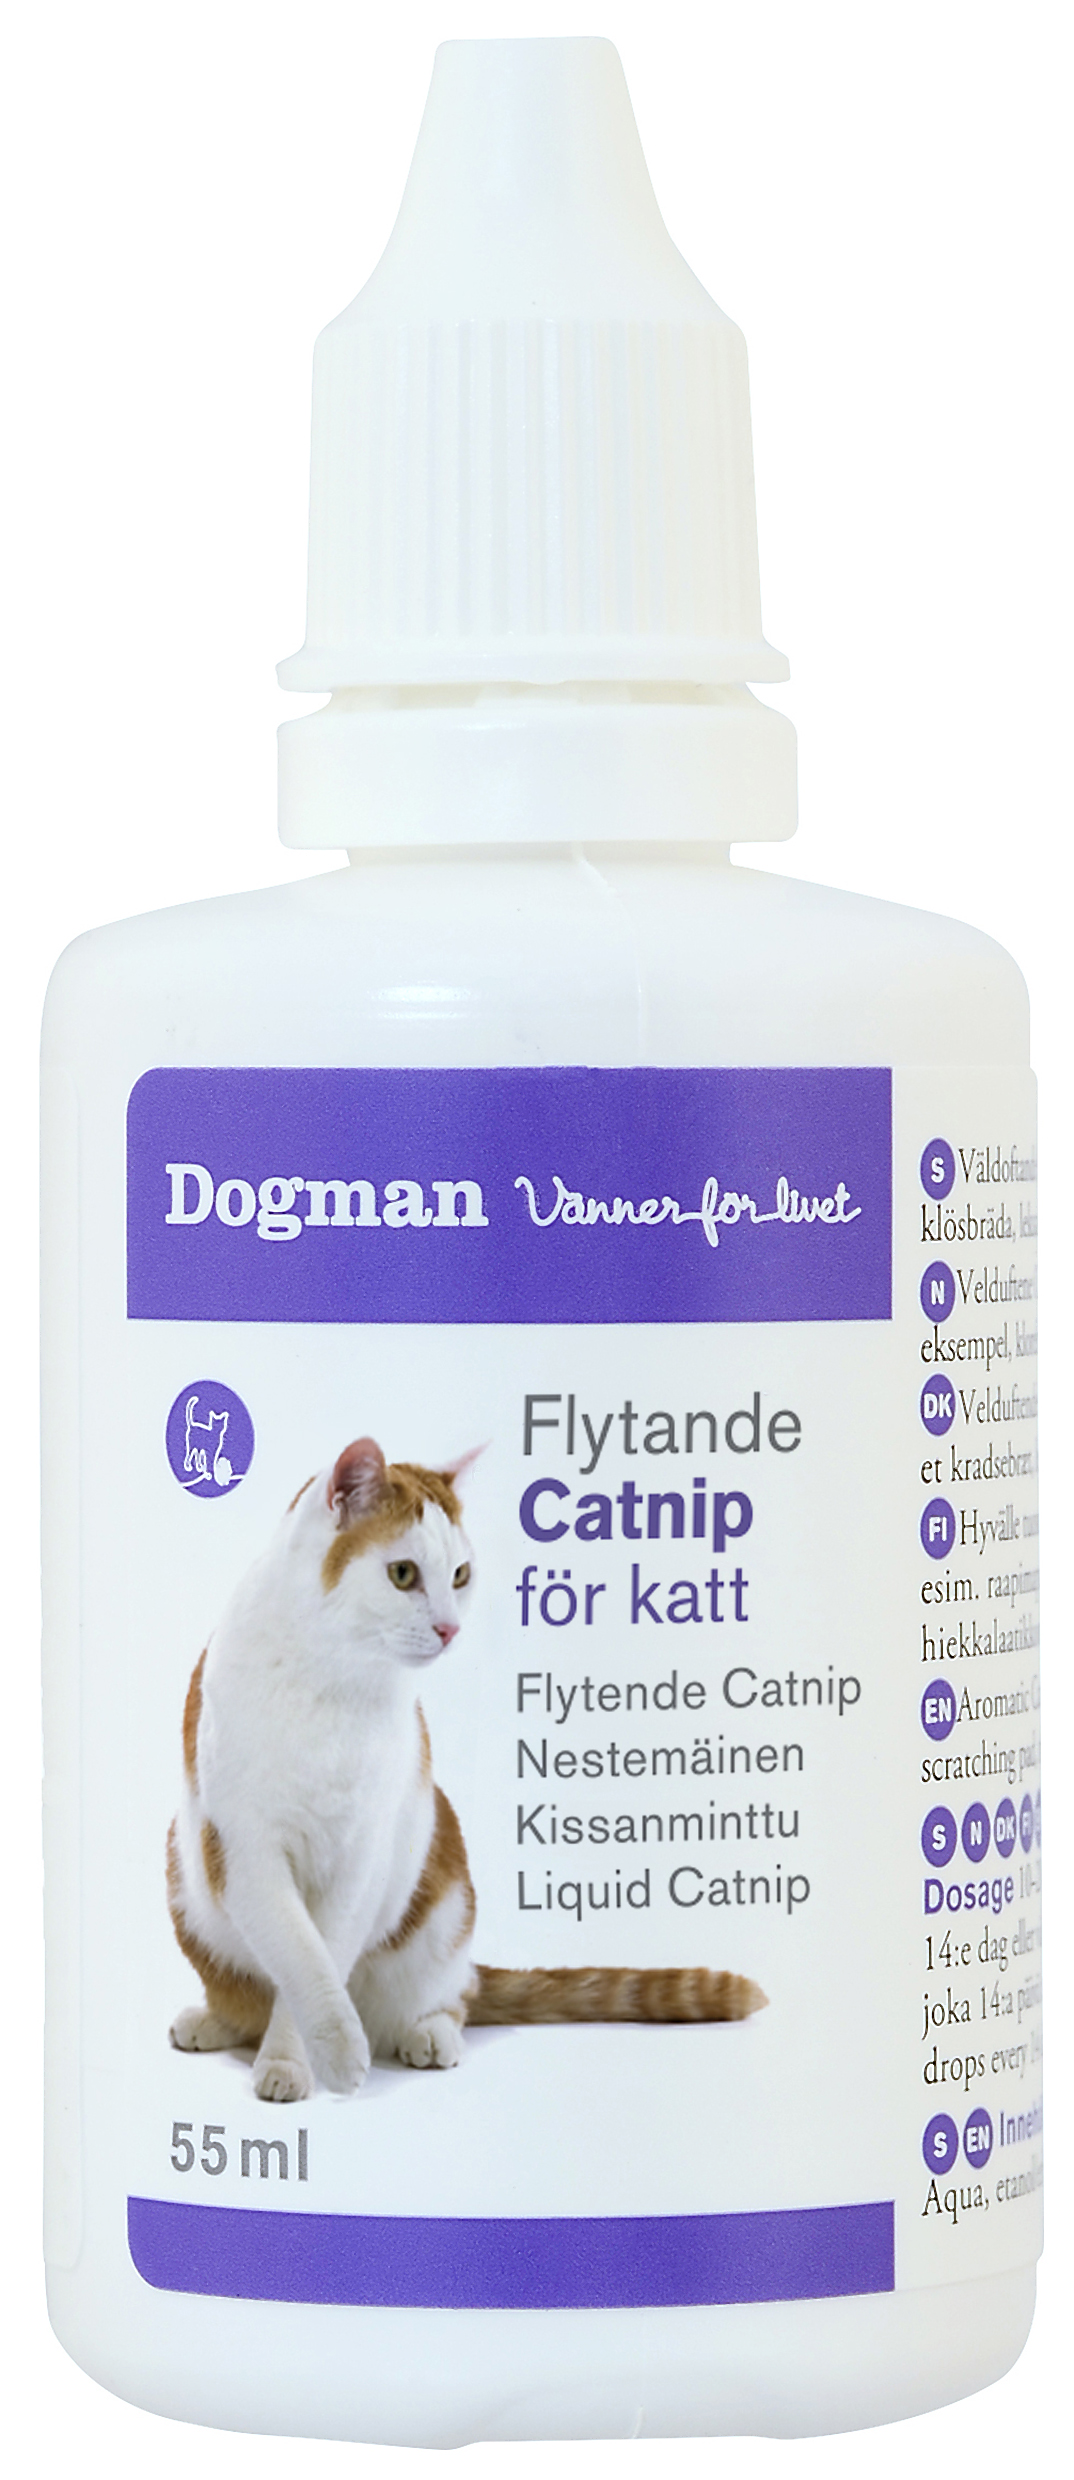 Dogman Catnip flytande 55ml